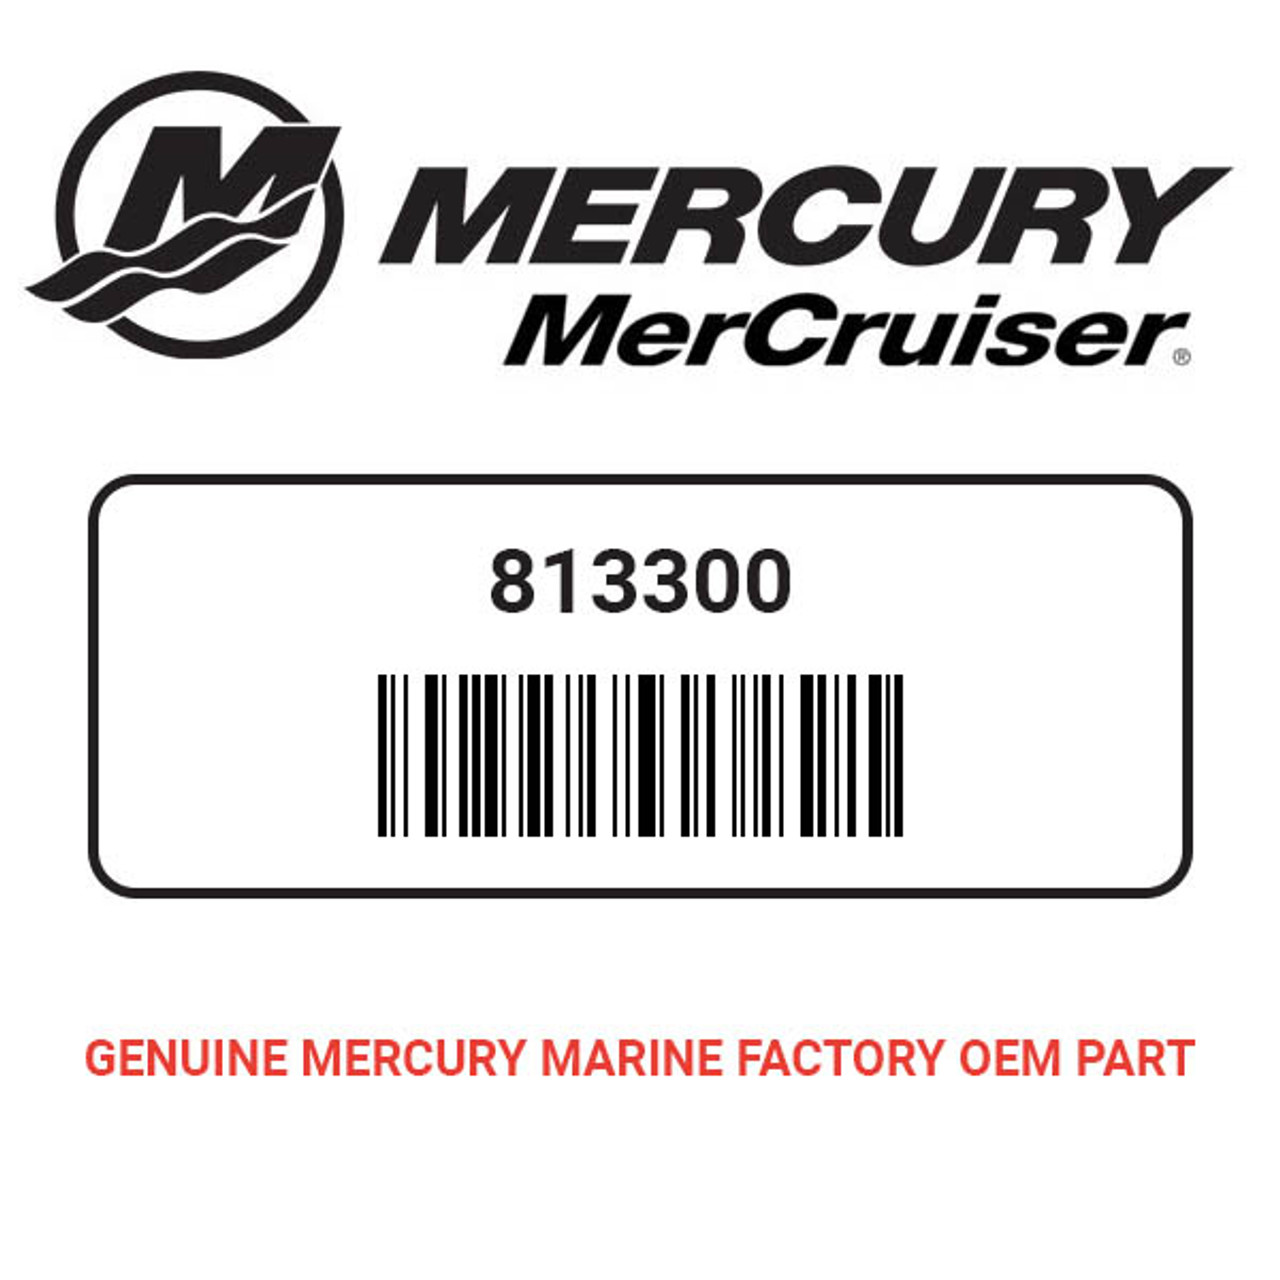 New Mercury Mercruiser Quicksilver Oem Part # 87-813300 Switch 